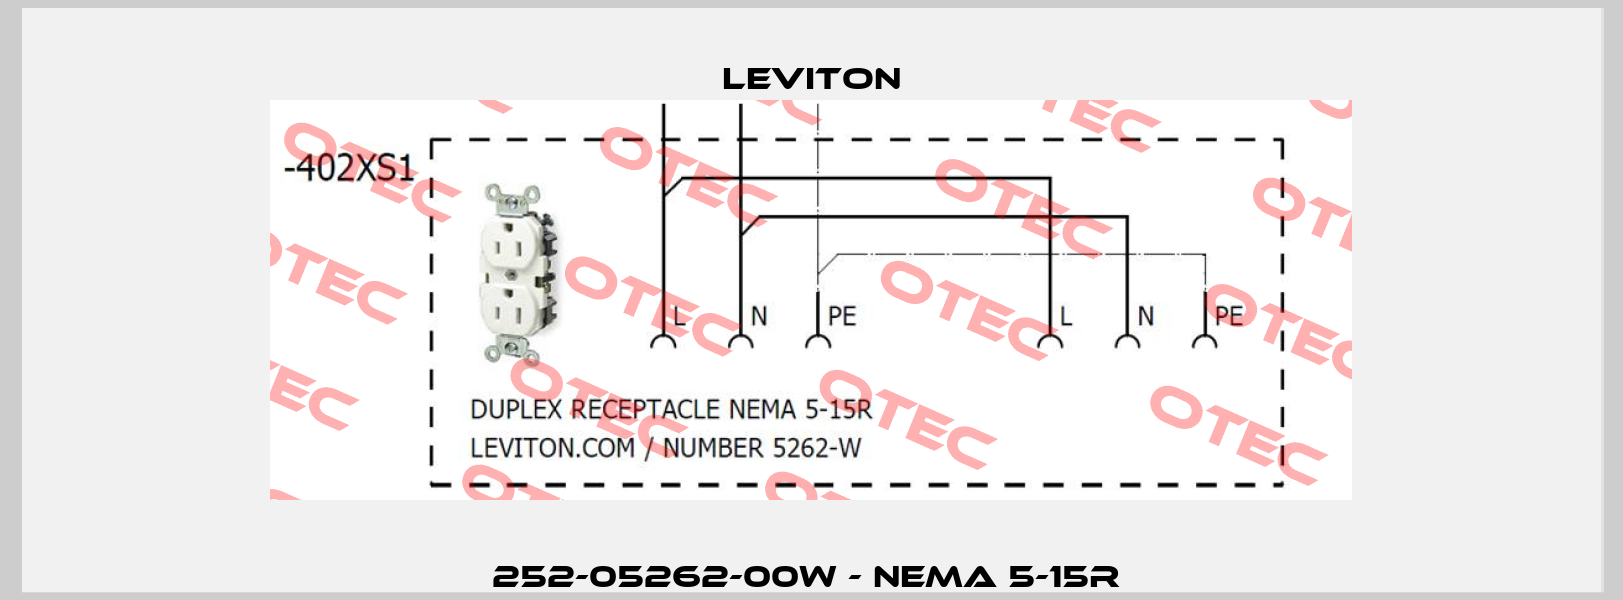 252-05262-00w - NEMA 5-15R  Leviton